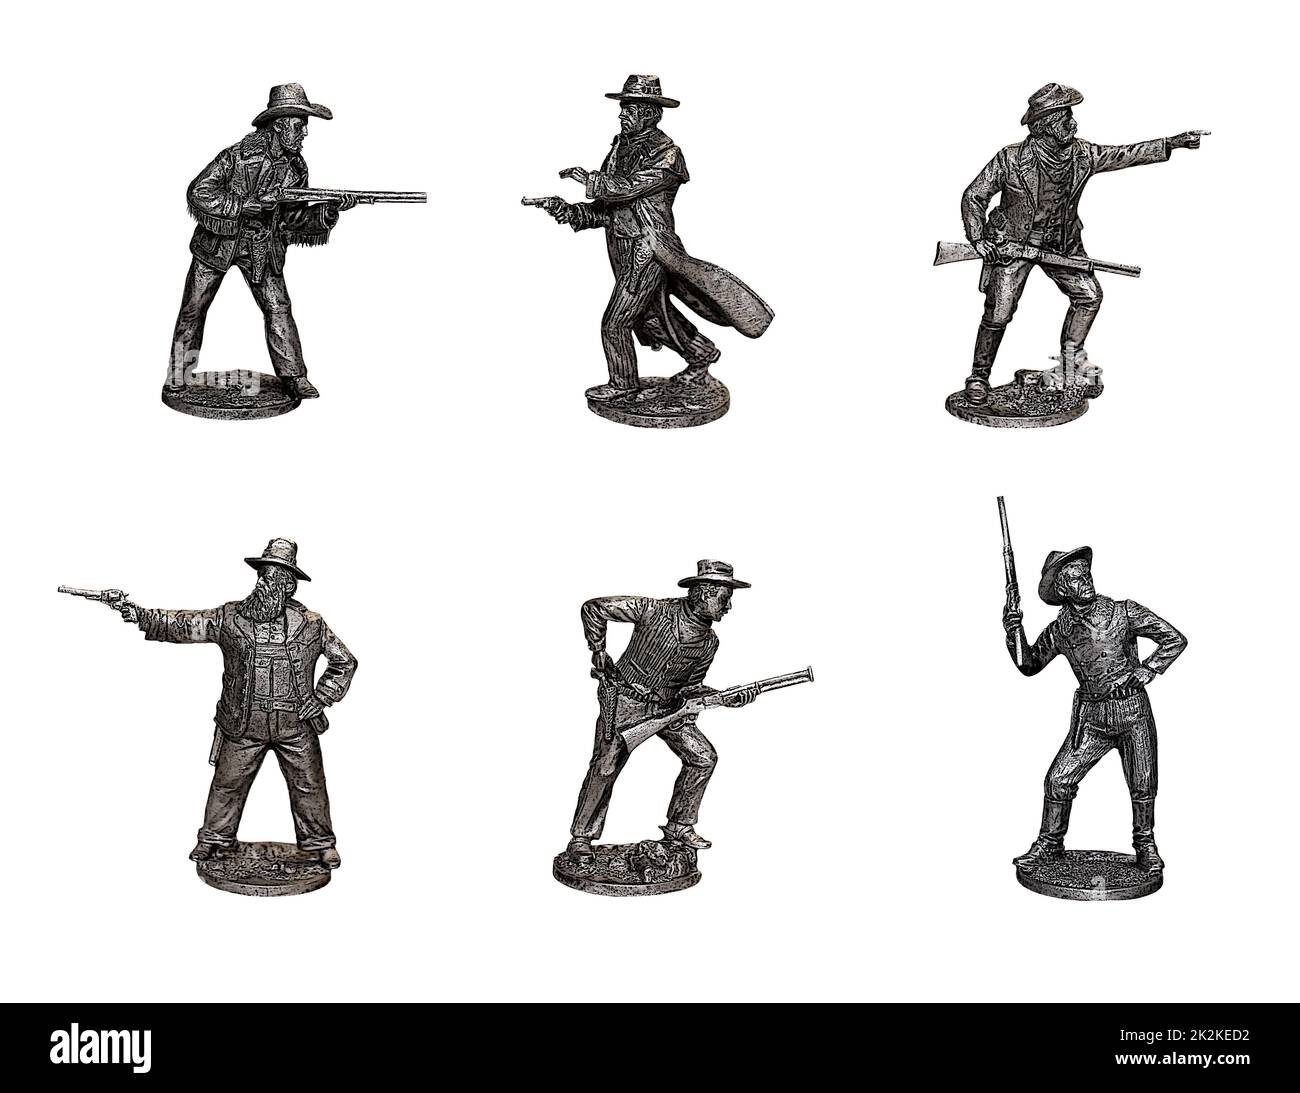 Cowboys. Gunslingers aus dem Wilden Westen in verschiedenen Posen. Foto mit Zinnfiguren. Stockfoto